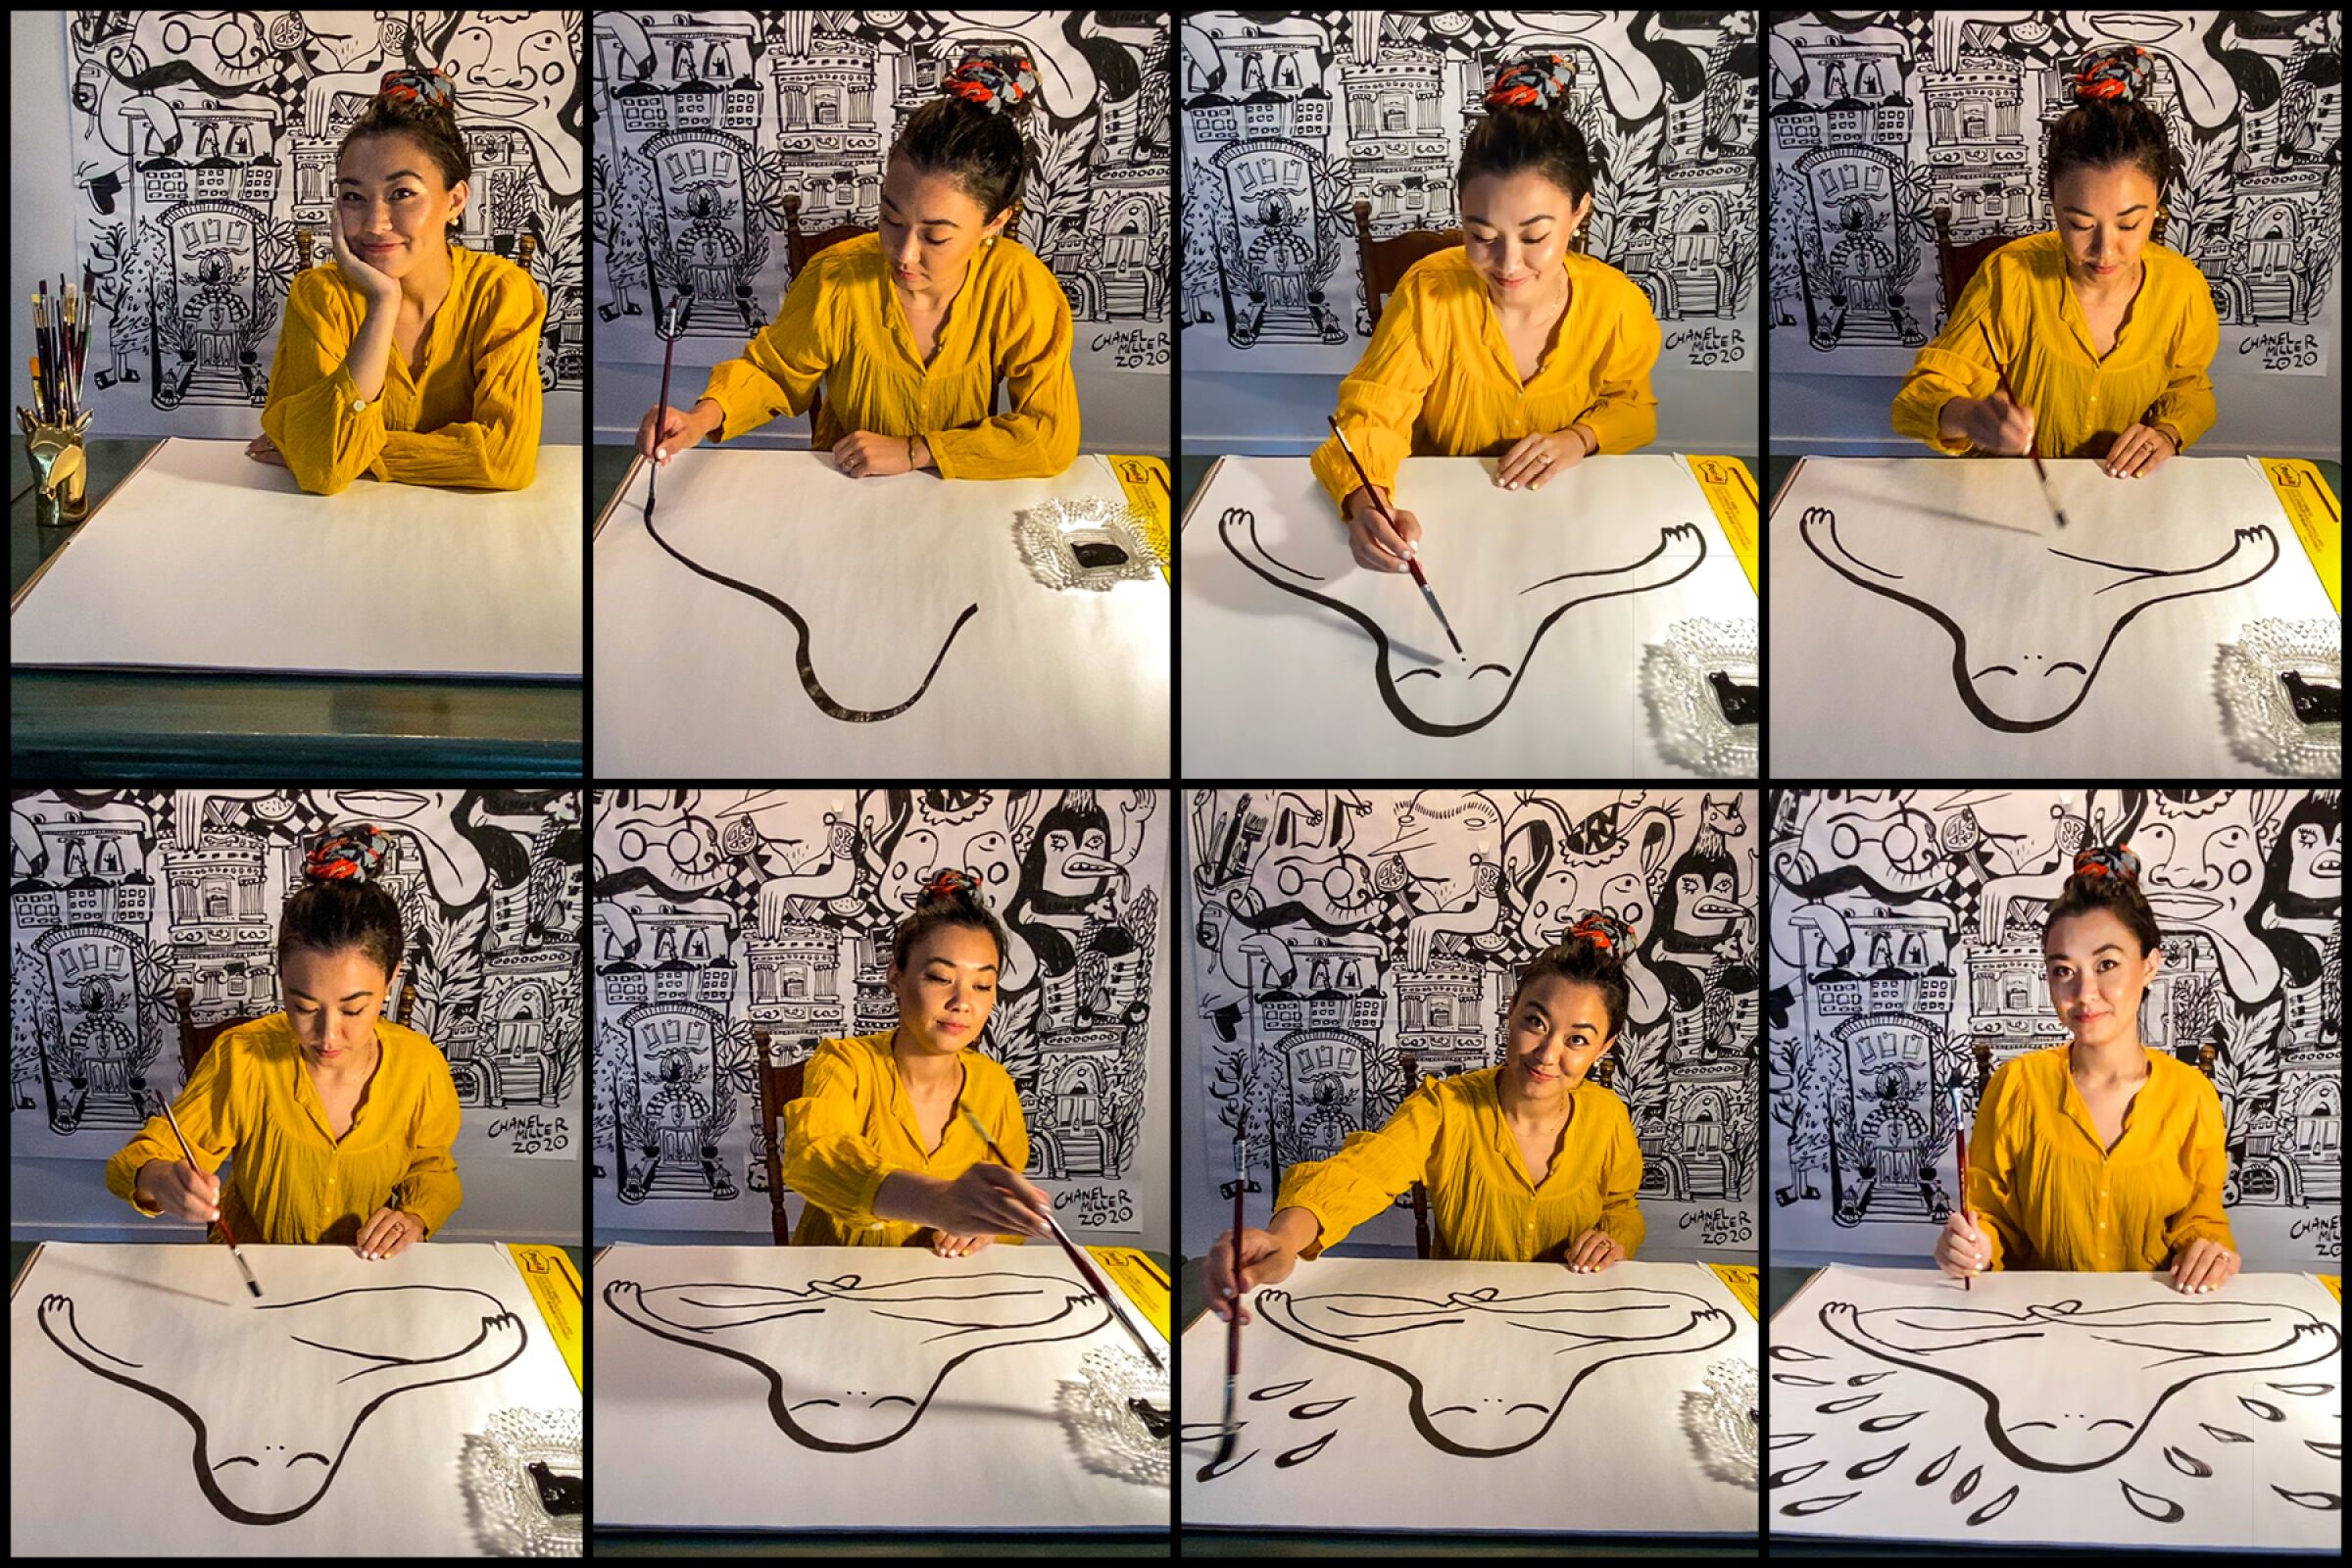 Chanel Miller demonstrates her art in a grid of screenshots taken via FaceTime on iPad.